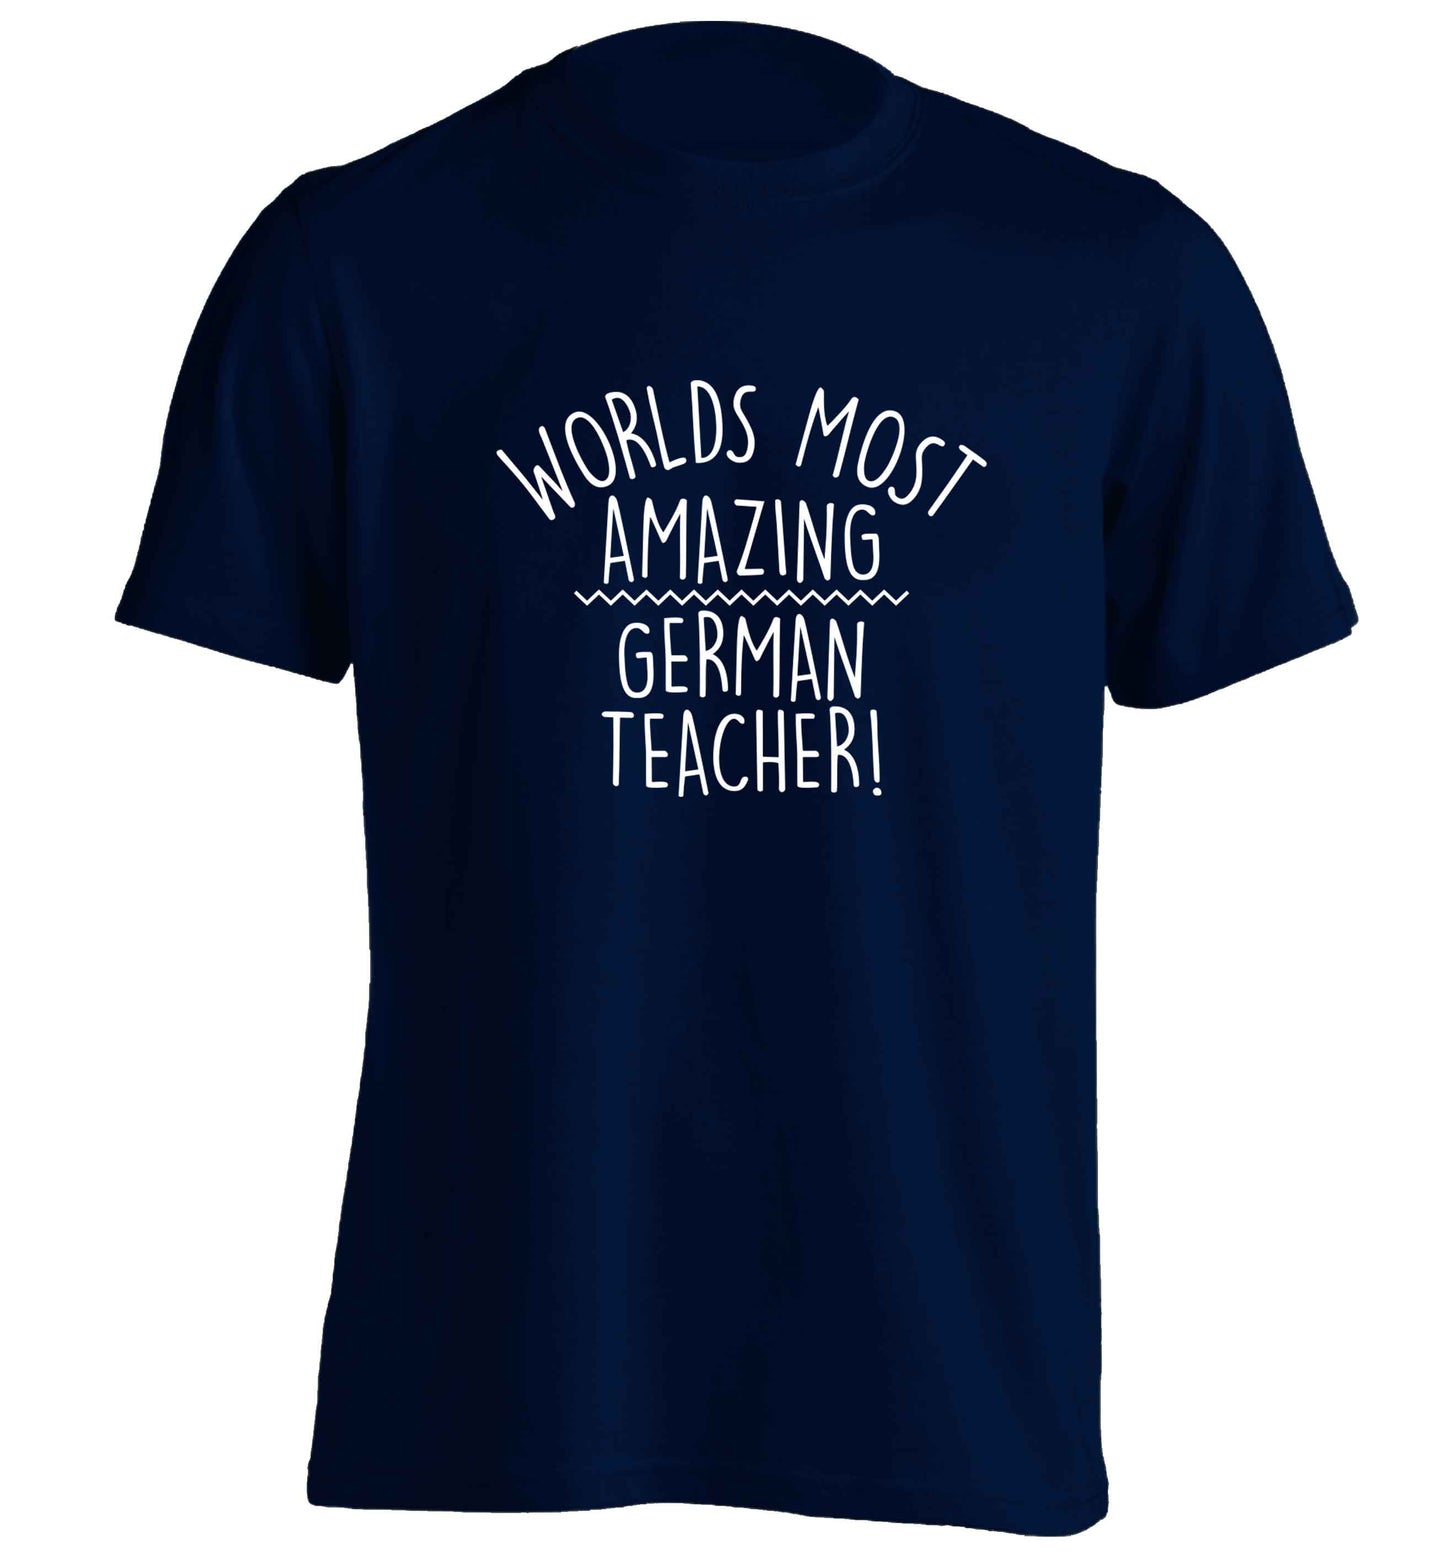 Worlds most amazing German teacher adults unisex navy Tshirt 2XL